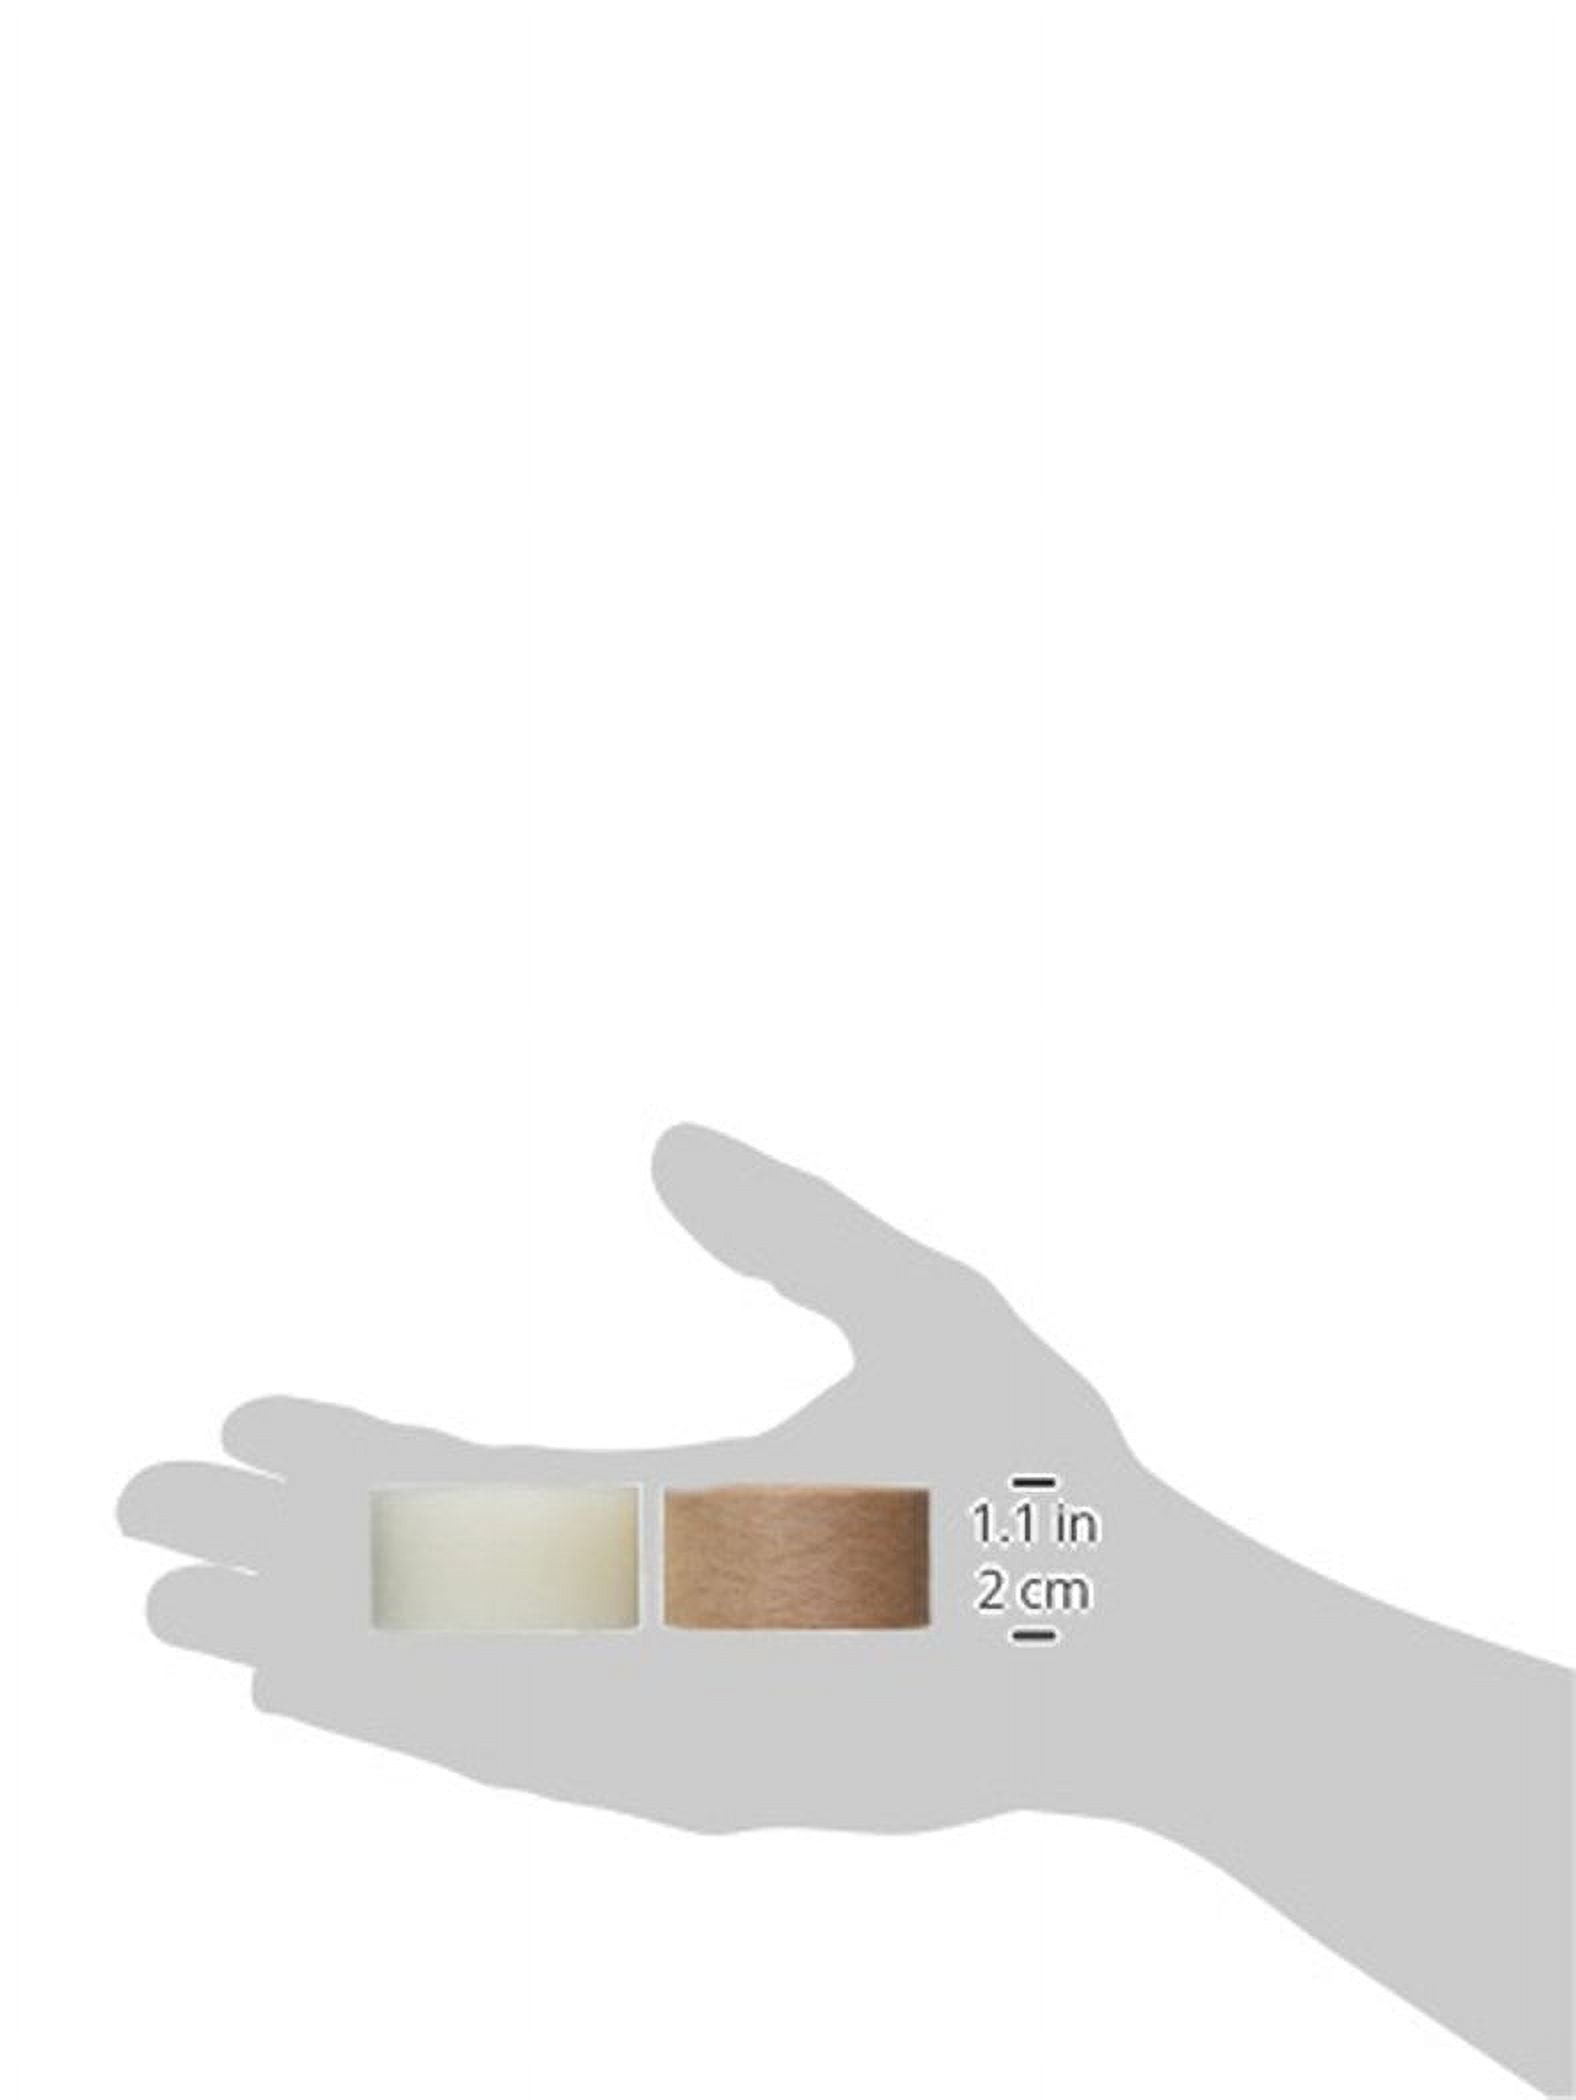 3M Blenderm Clear Plastic Waterproof Medical Tape 1 x 5 Yd 1 Box, 12 /Box  1525-1, 12 ct - Harris Teeter